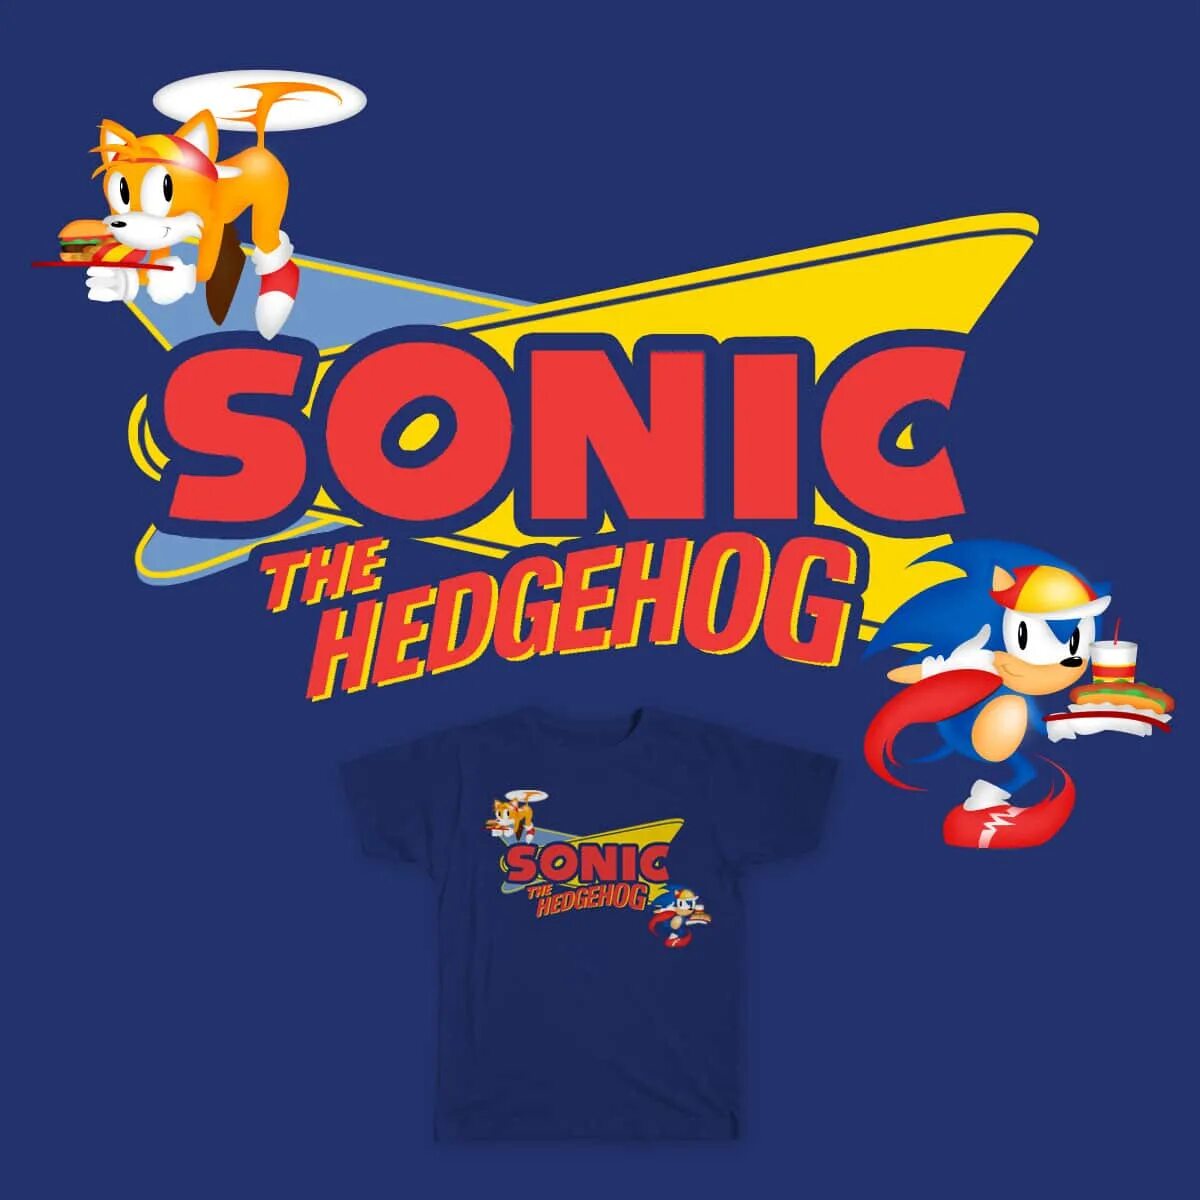 Sonic Drive-in. Sonic Drive-in logo. Sonic America's Drive-in лого. Sonic score. Соник драйв